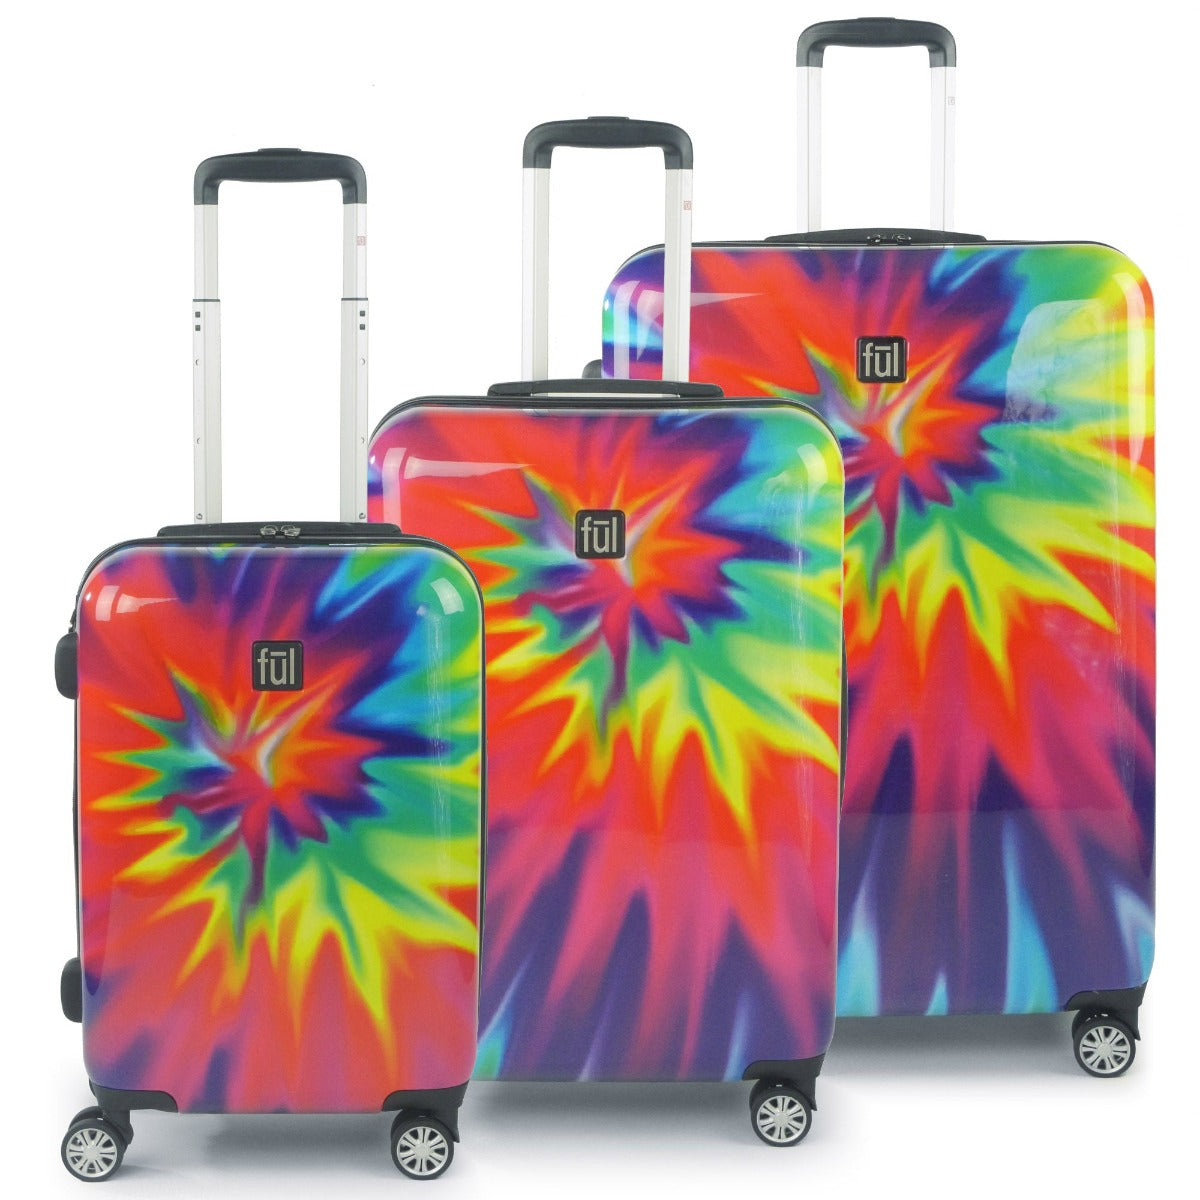 Tie dye Rainbow Swirl Ful Hard sided 3 Pc Rolling Luggage Set 22" 24" 28" On Sale $50 off